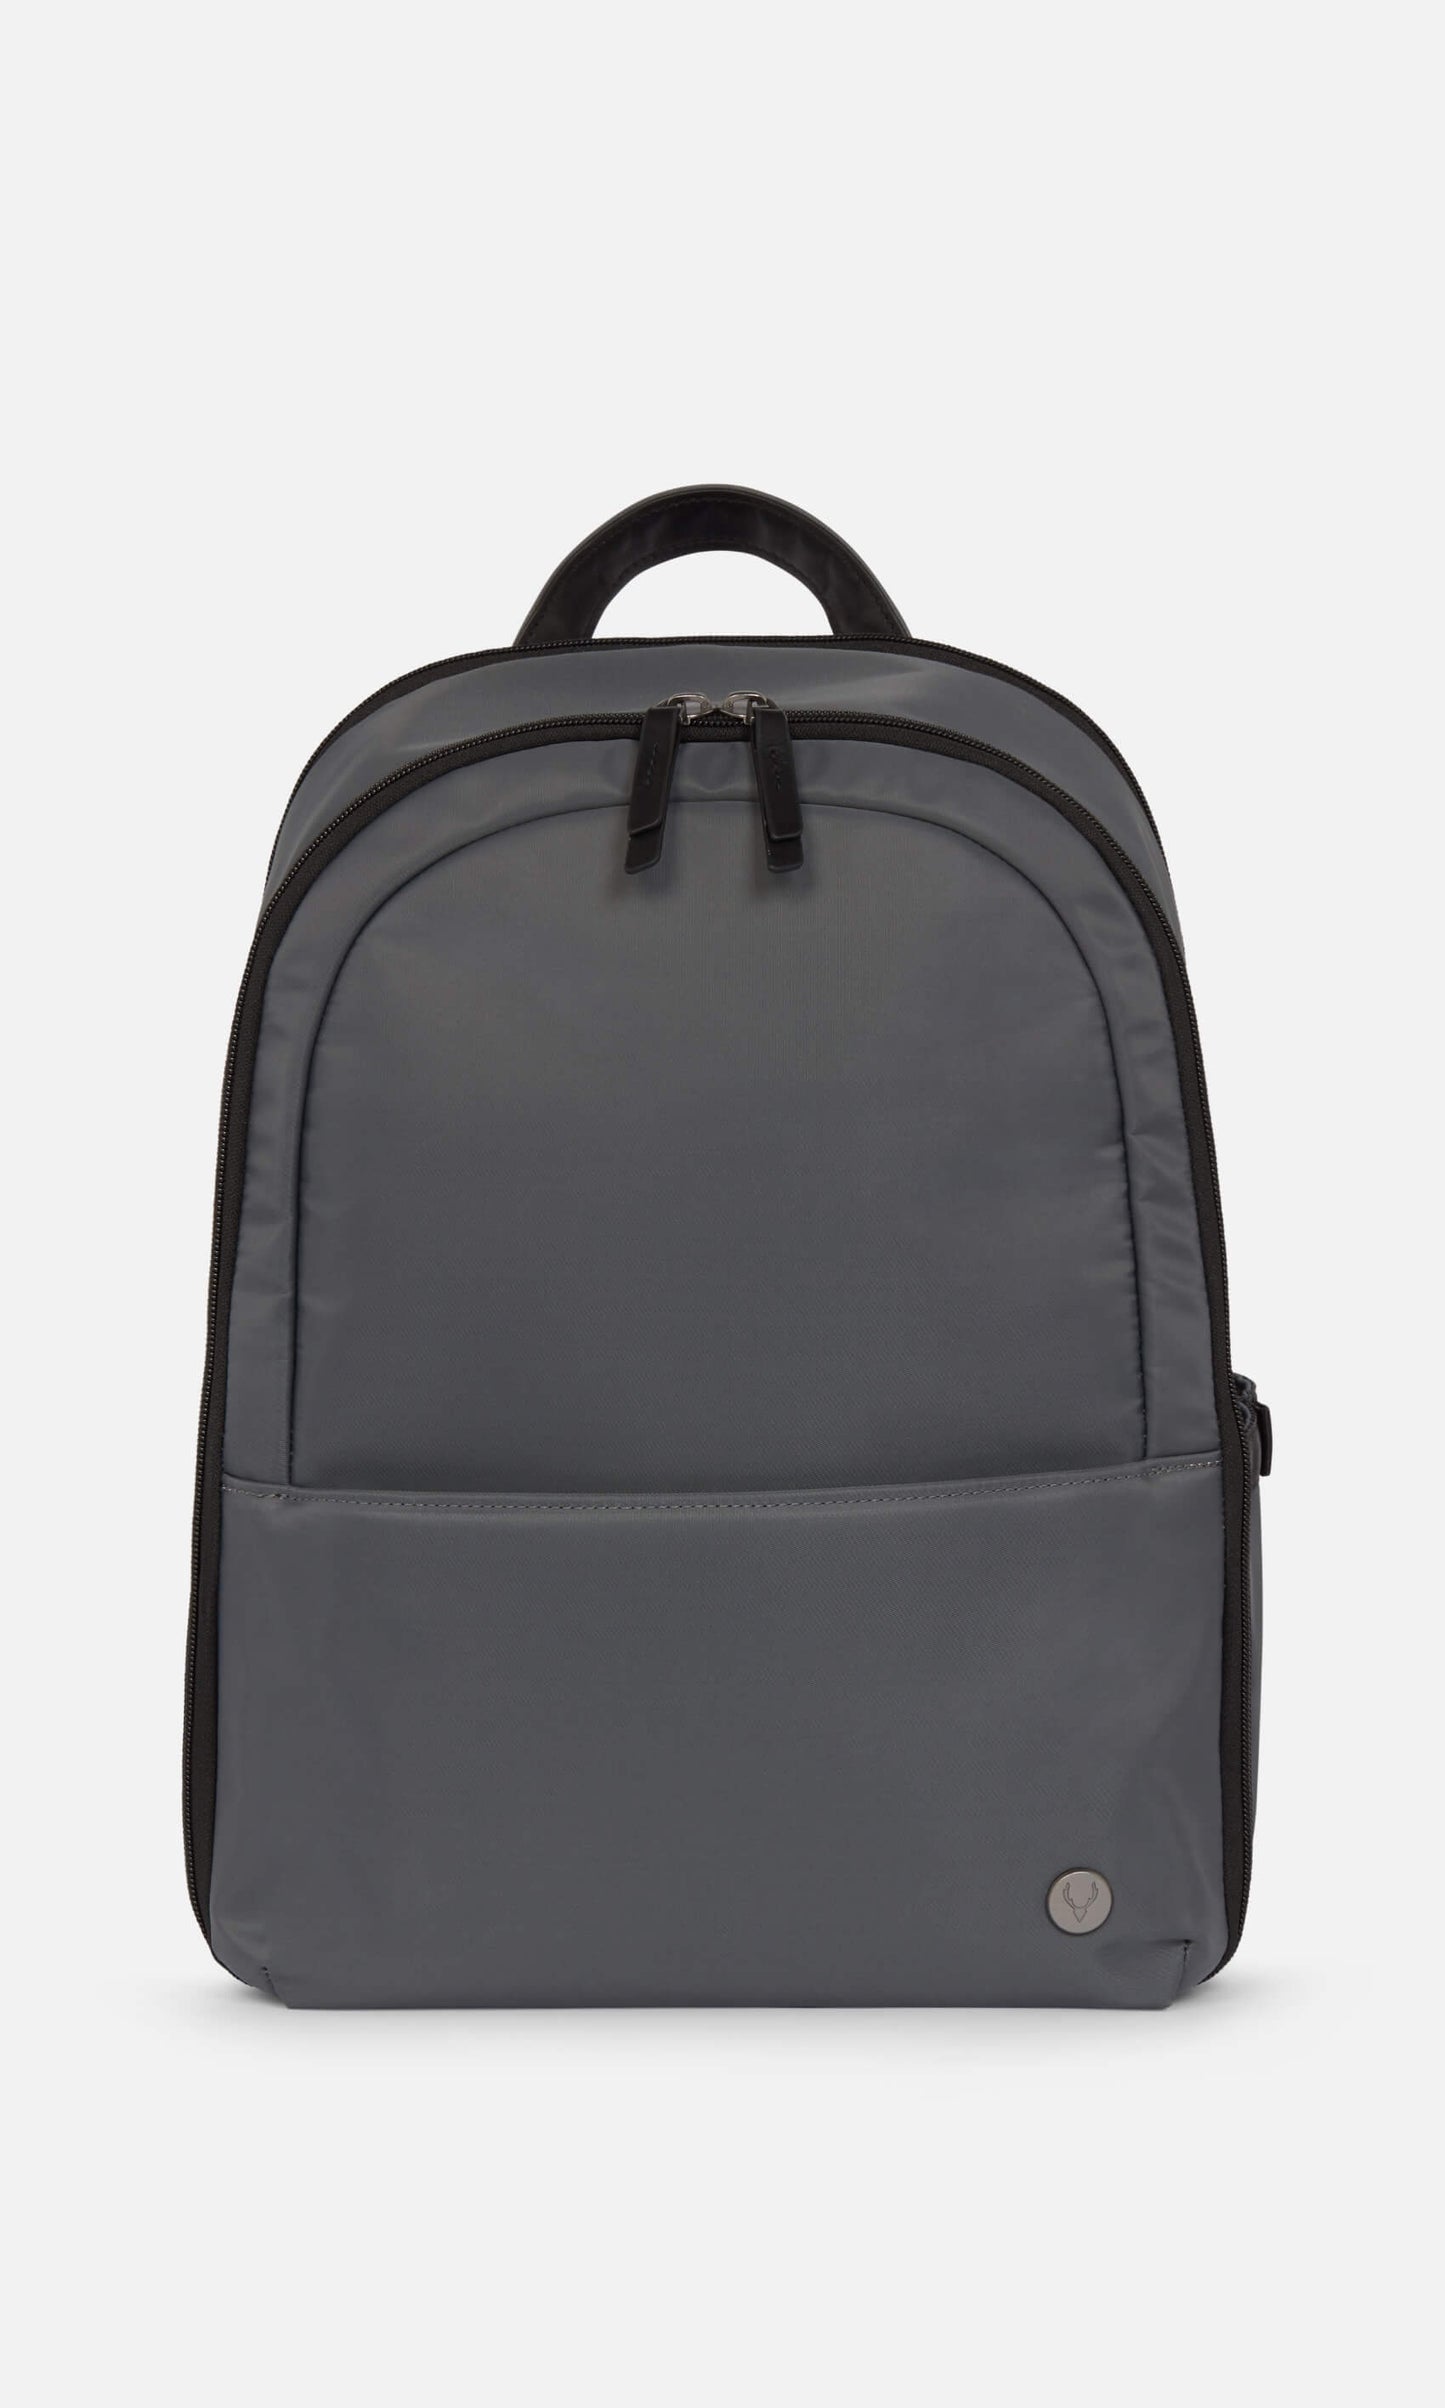 Chelsea backpack in slate